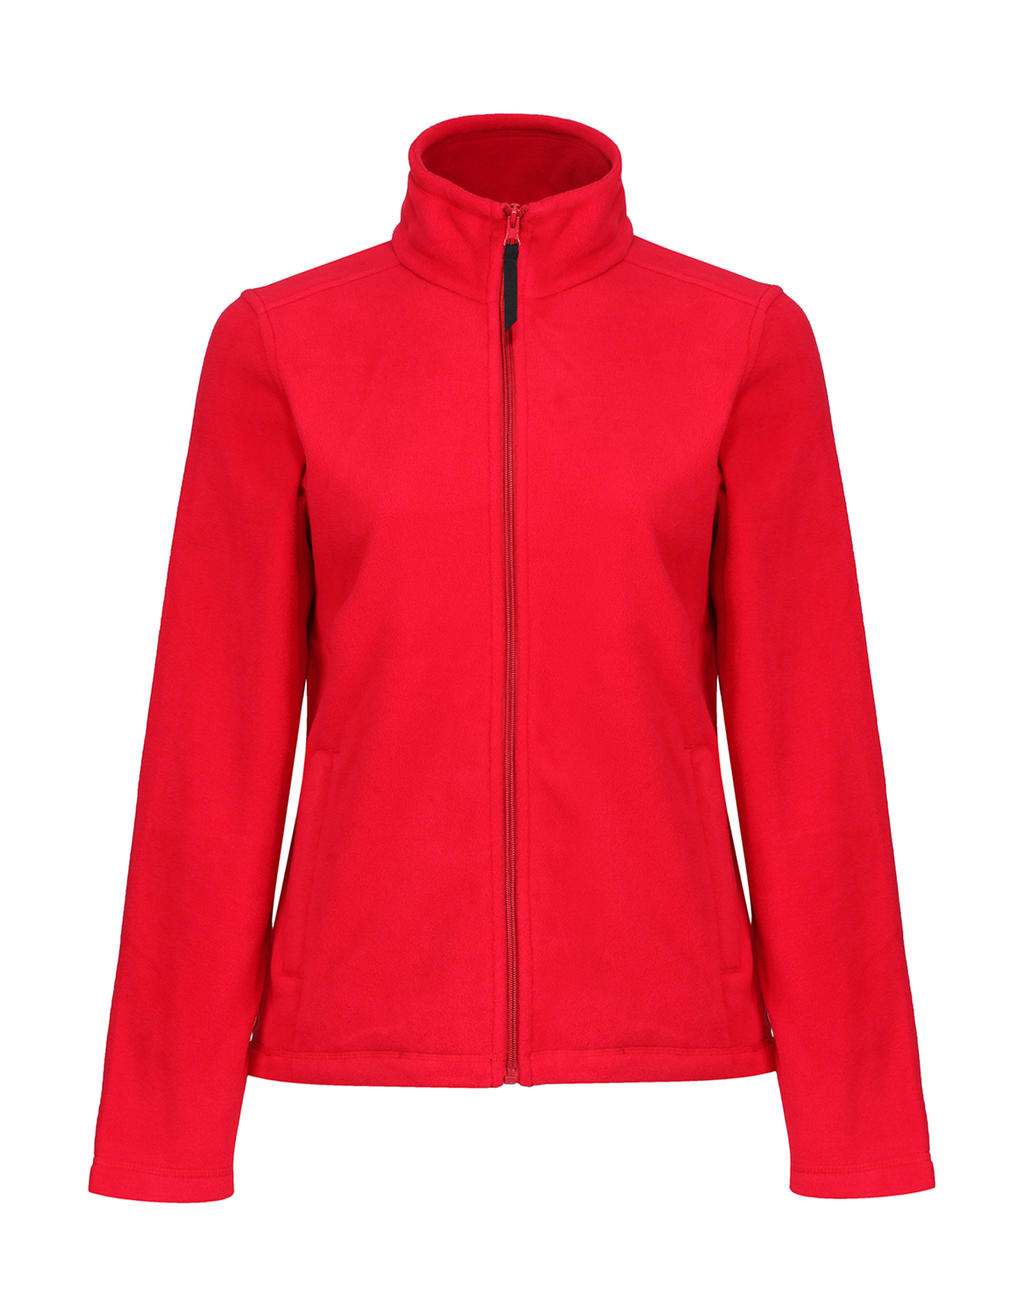  Womens Micro Full Zip Fleece in Farbe Classic Red